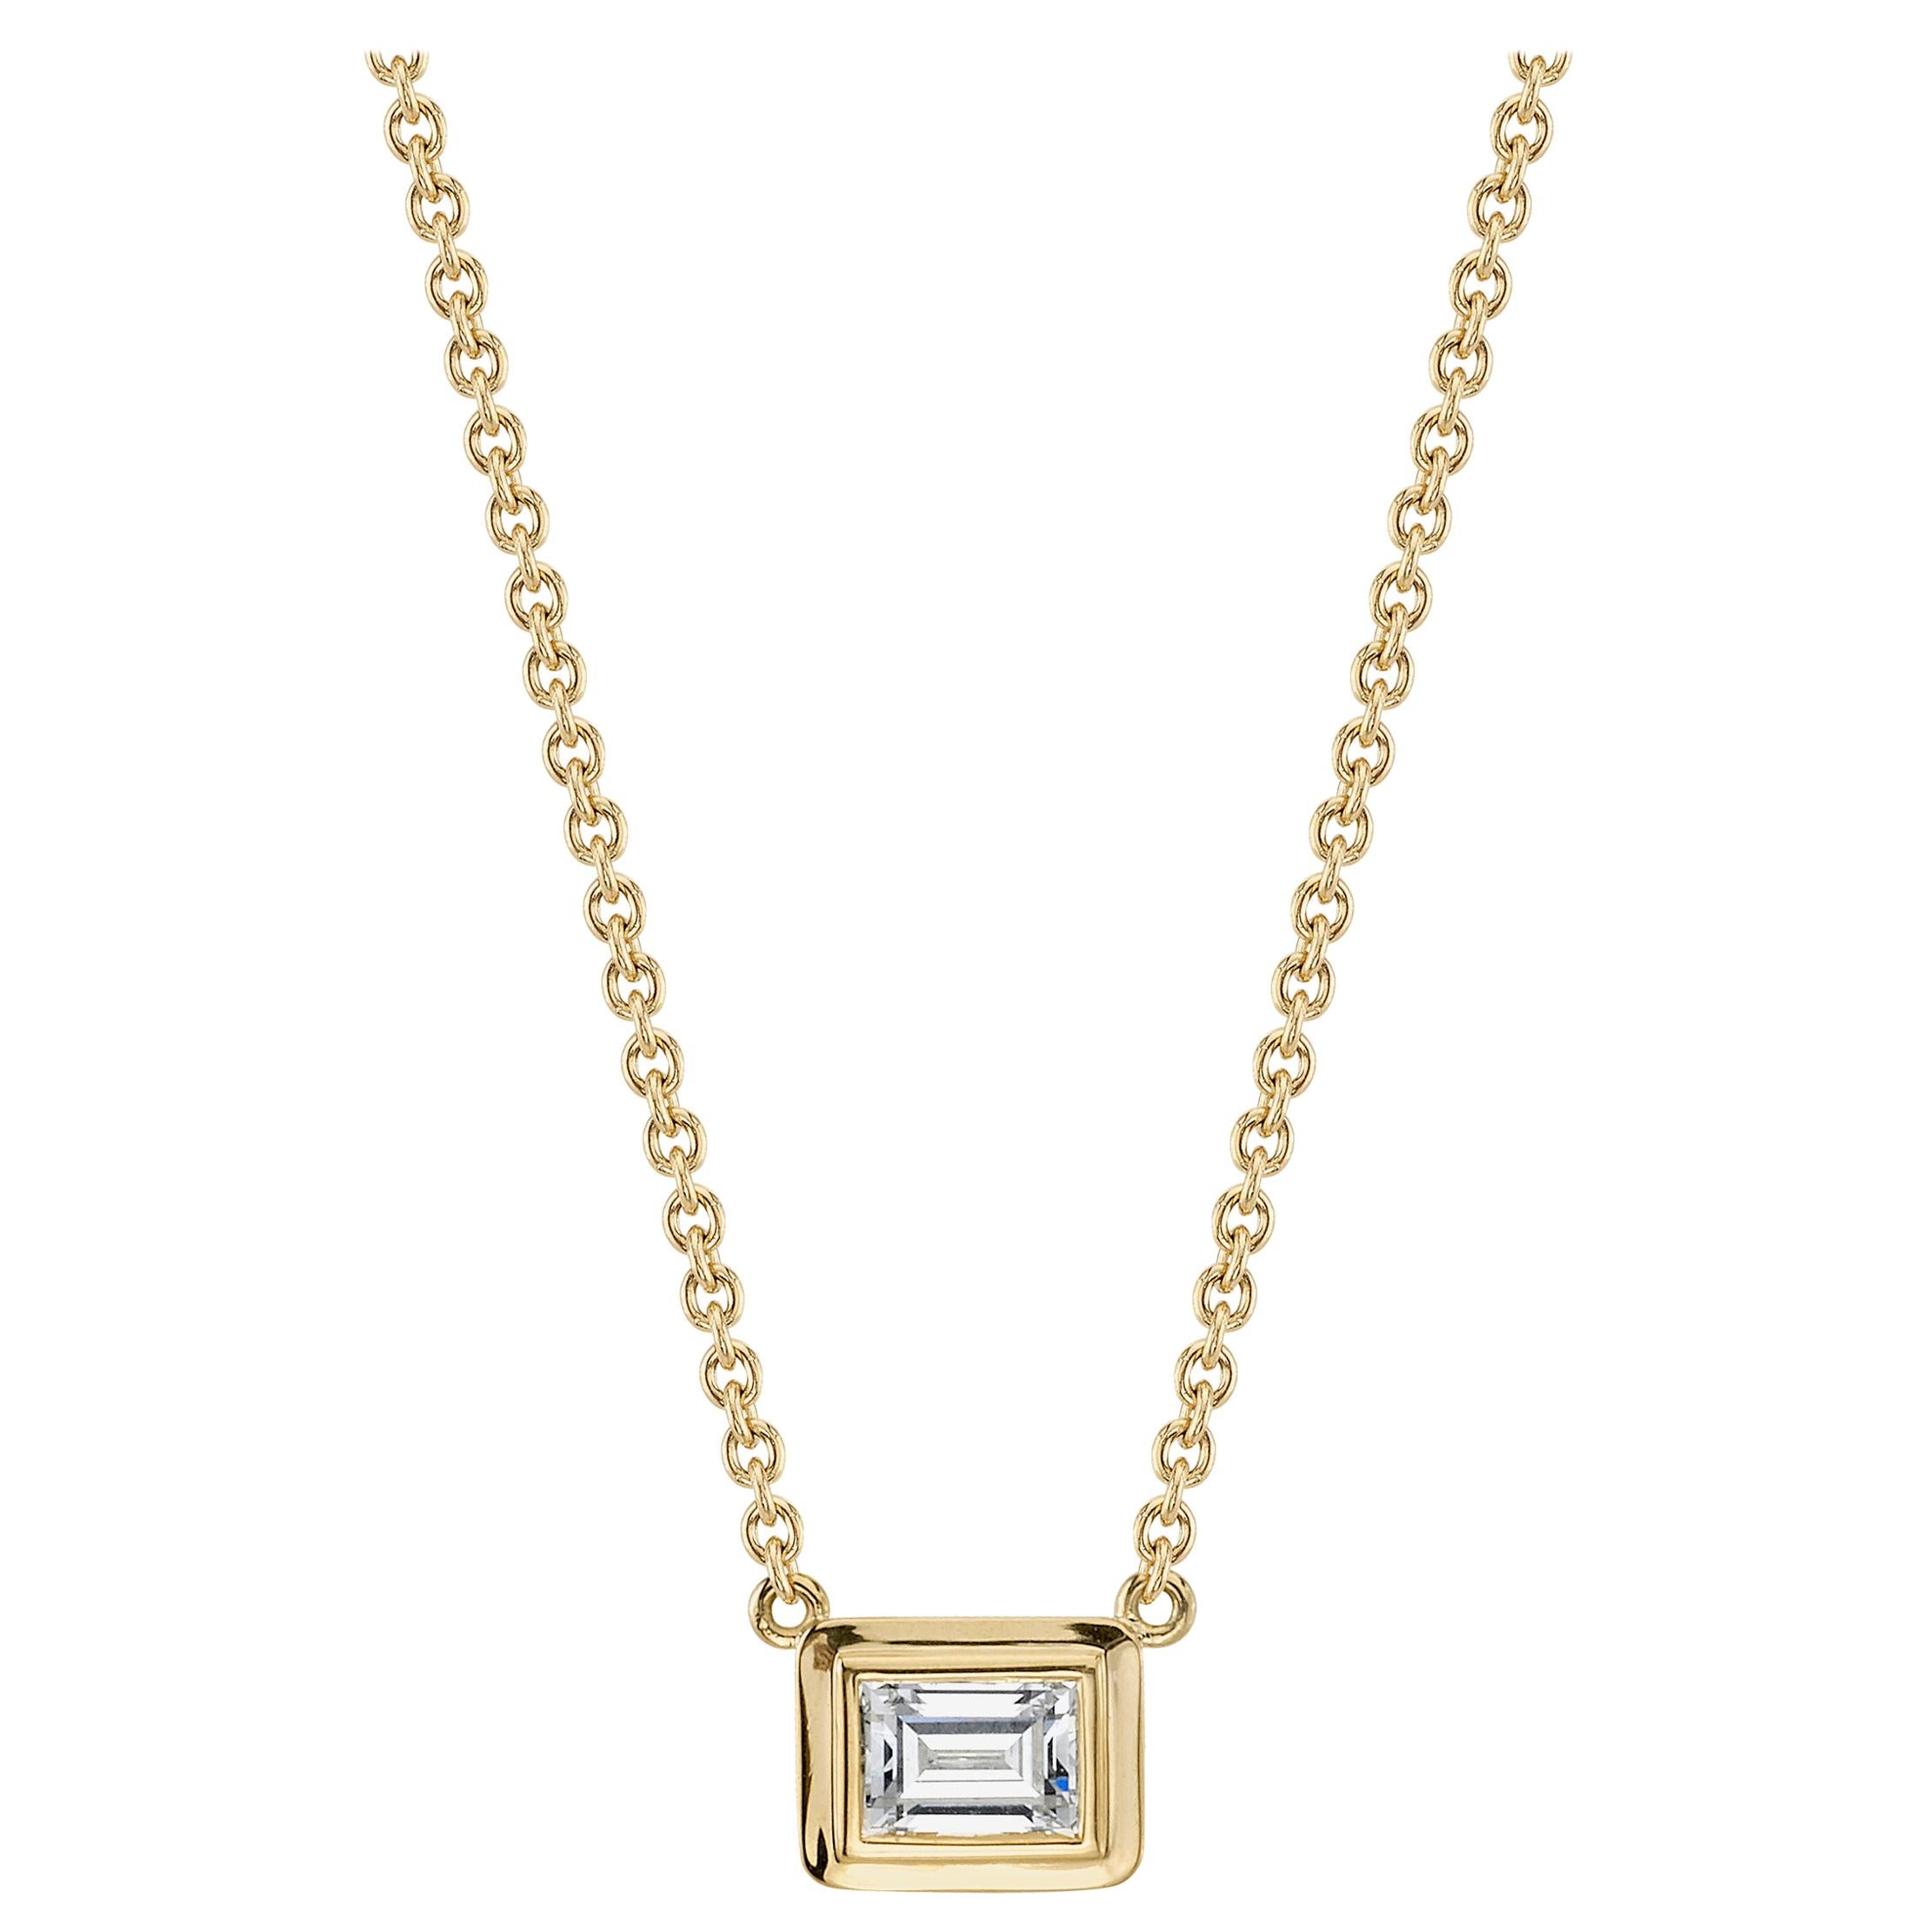 0.46 Carat GIA Certified Emerald Cut Diamond Set in an 18k Yellow Gold Pendant